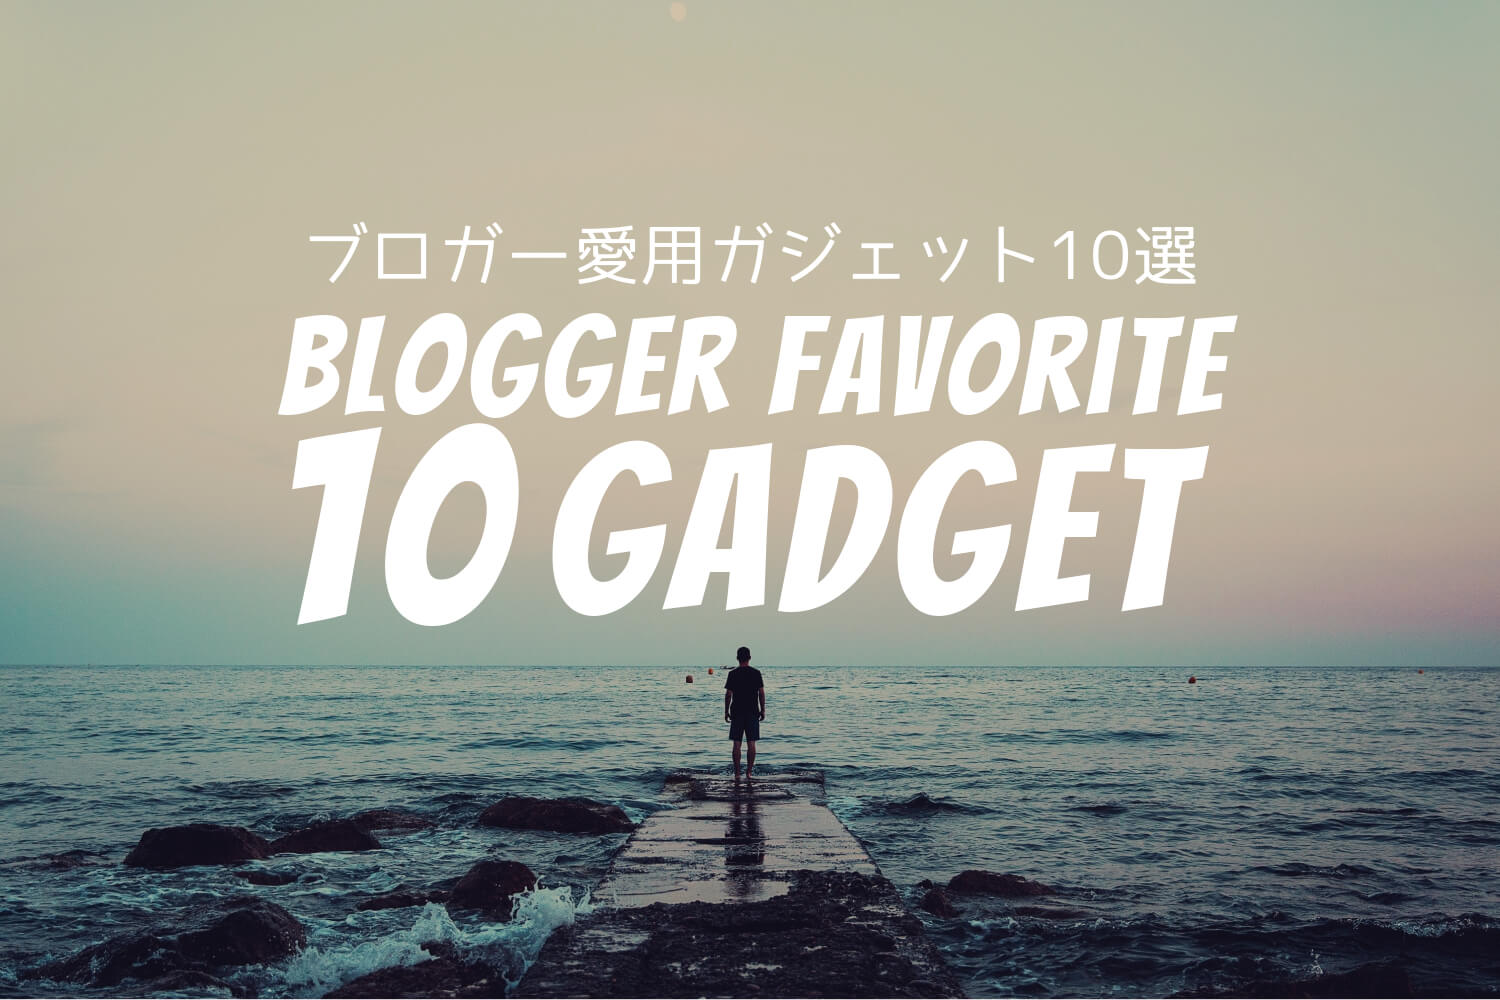 Blogger Favorite 10 Gadget image